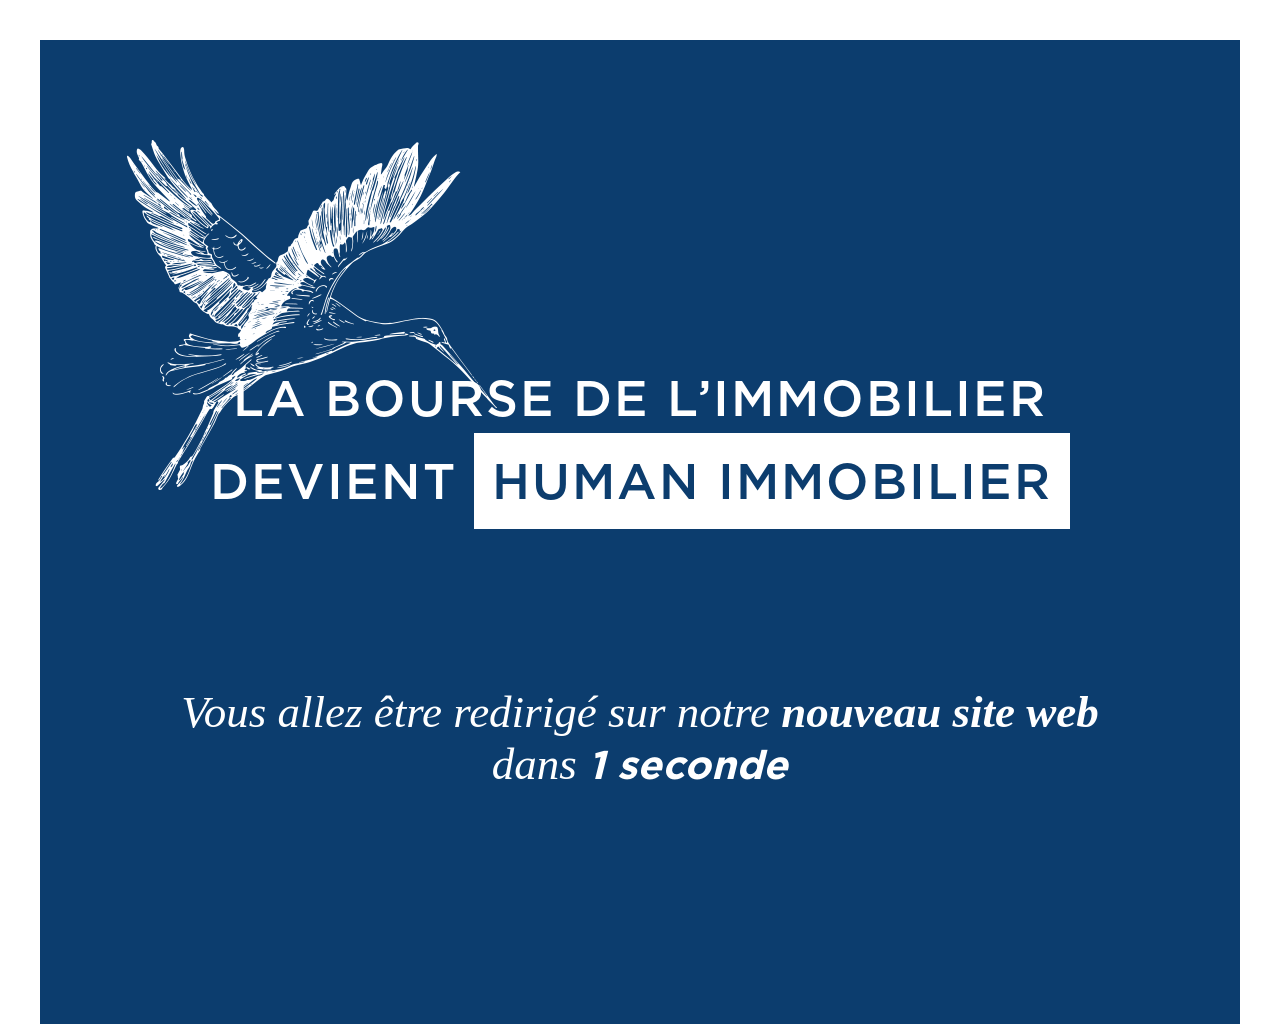 www.bourse-immobilier.fr